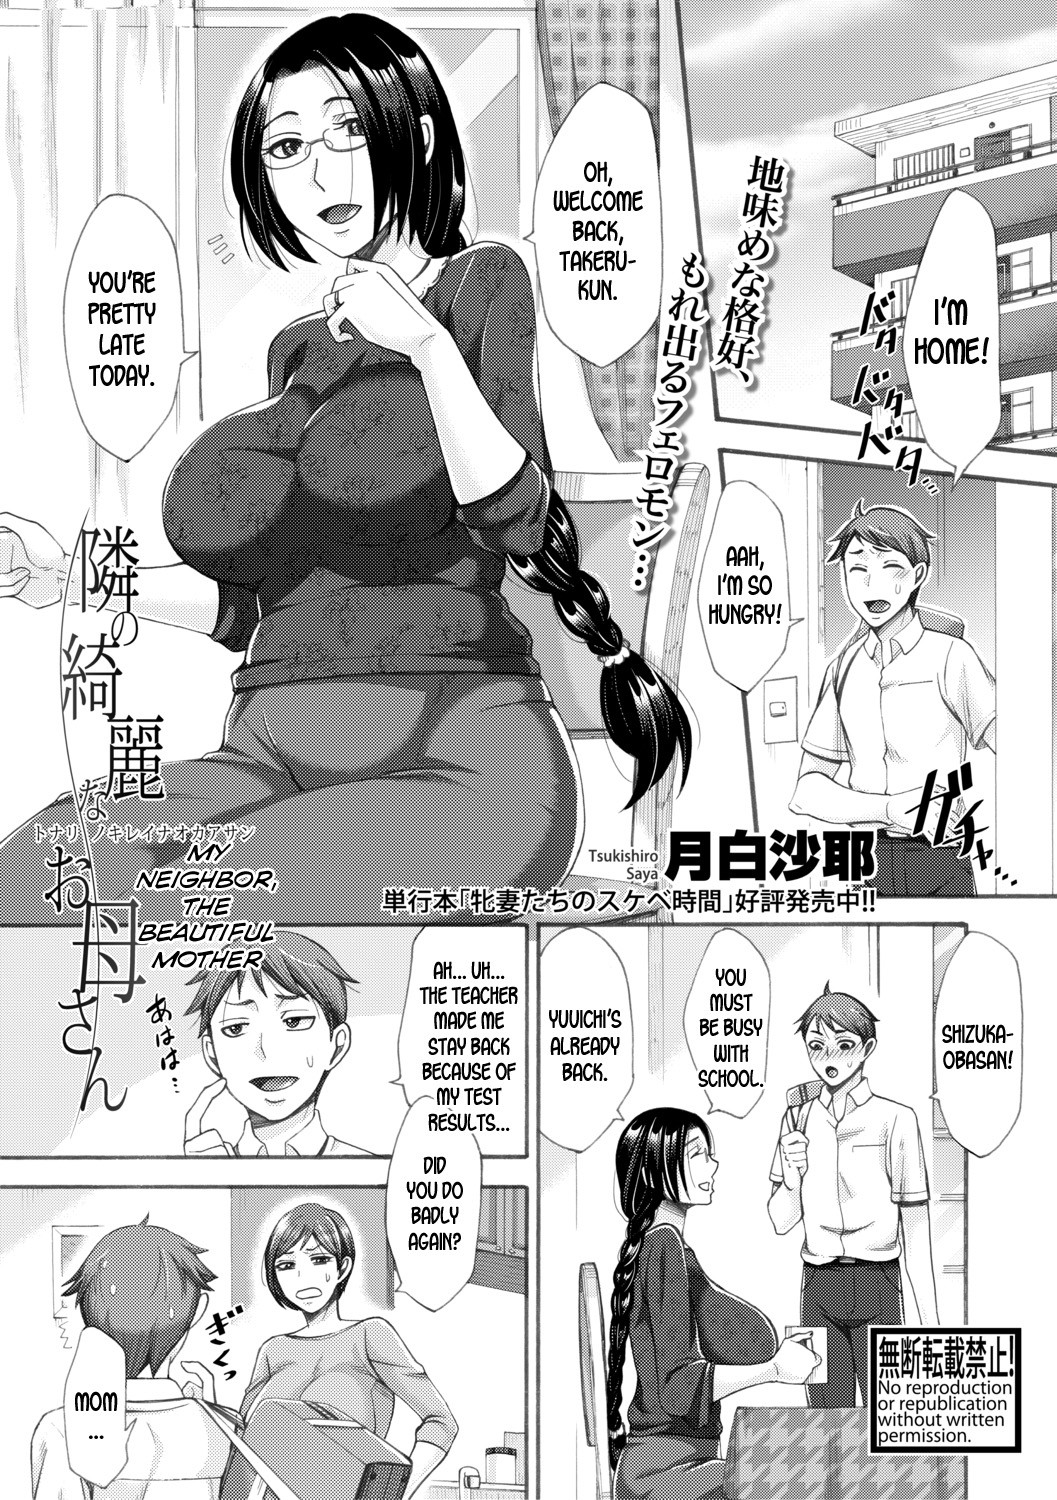 Hentai Manga Comic-My Neighbor, The Beautiful Mother-Read-1